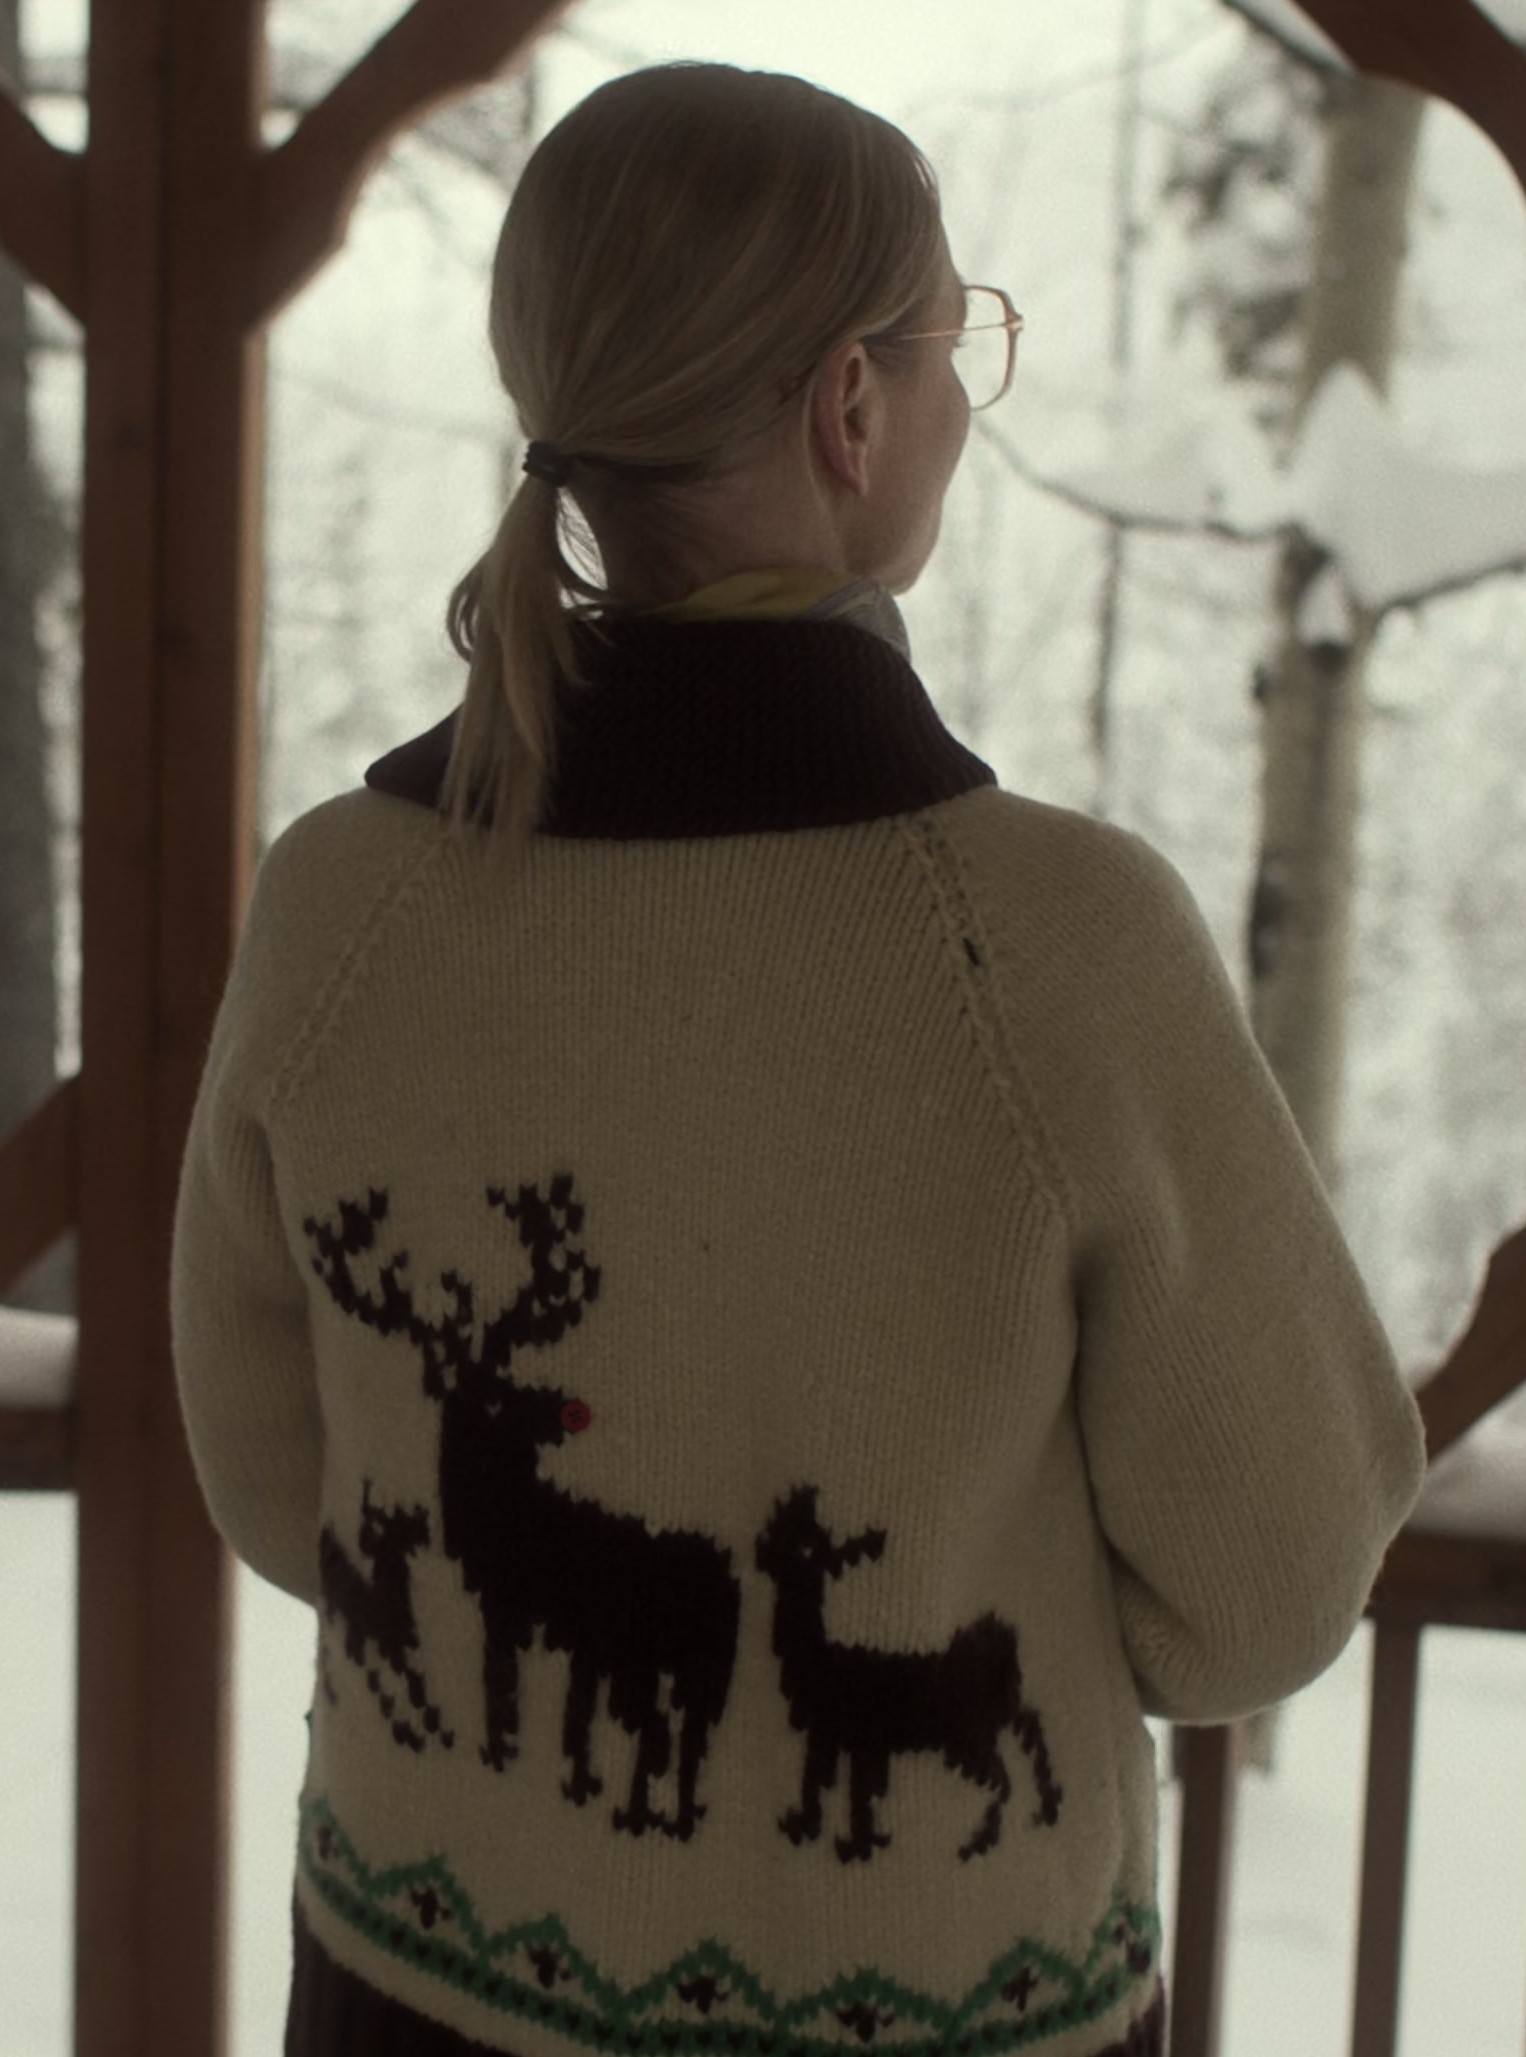 Worn on Fargo TV Show - Full-Zip Knit Sweater with Nordic Reindeer Design Worn by Kari Matchett as Linda Hillman